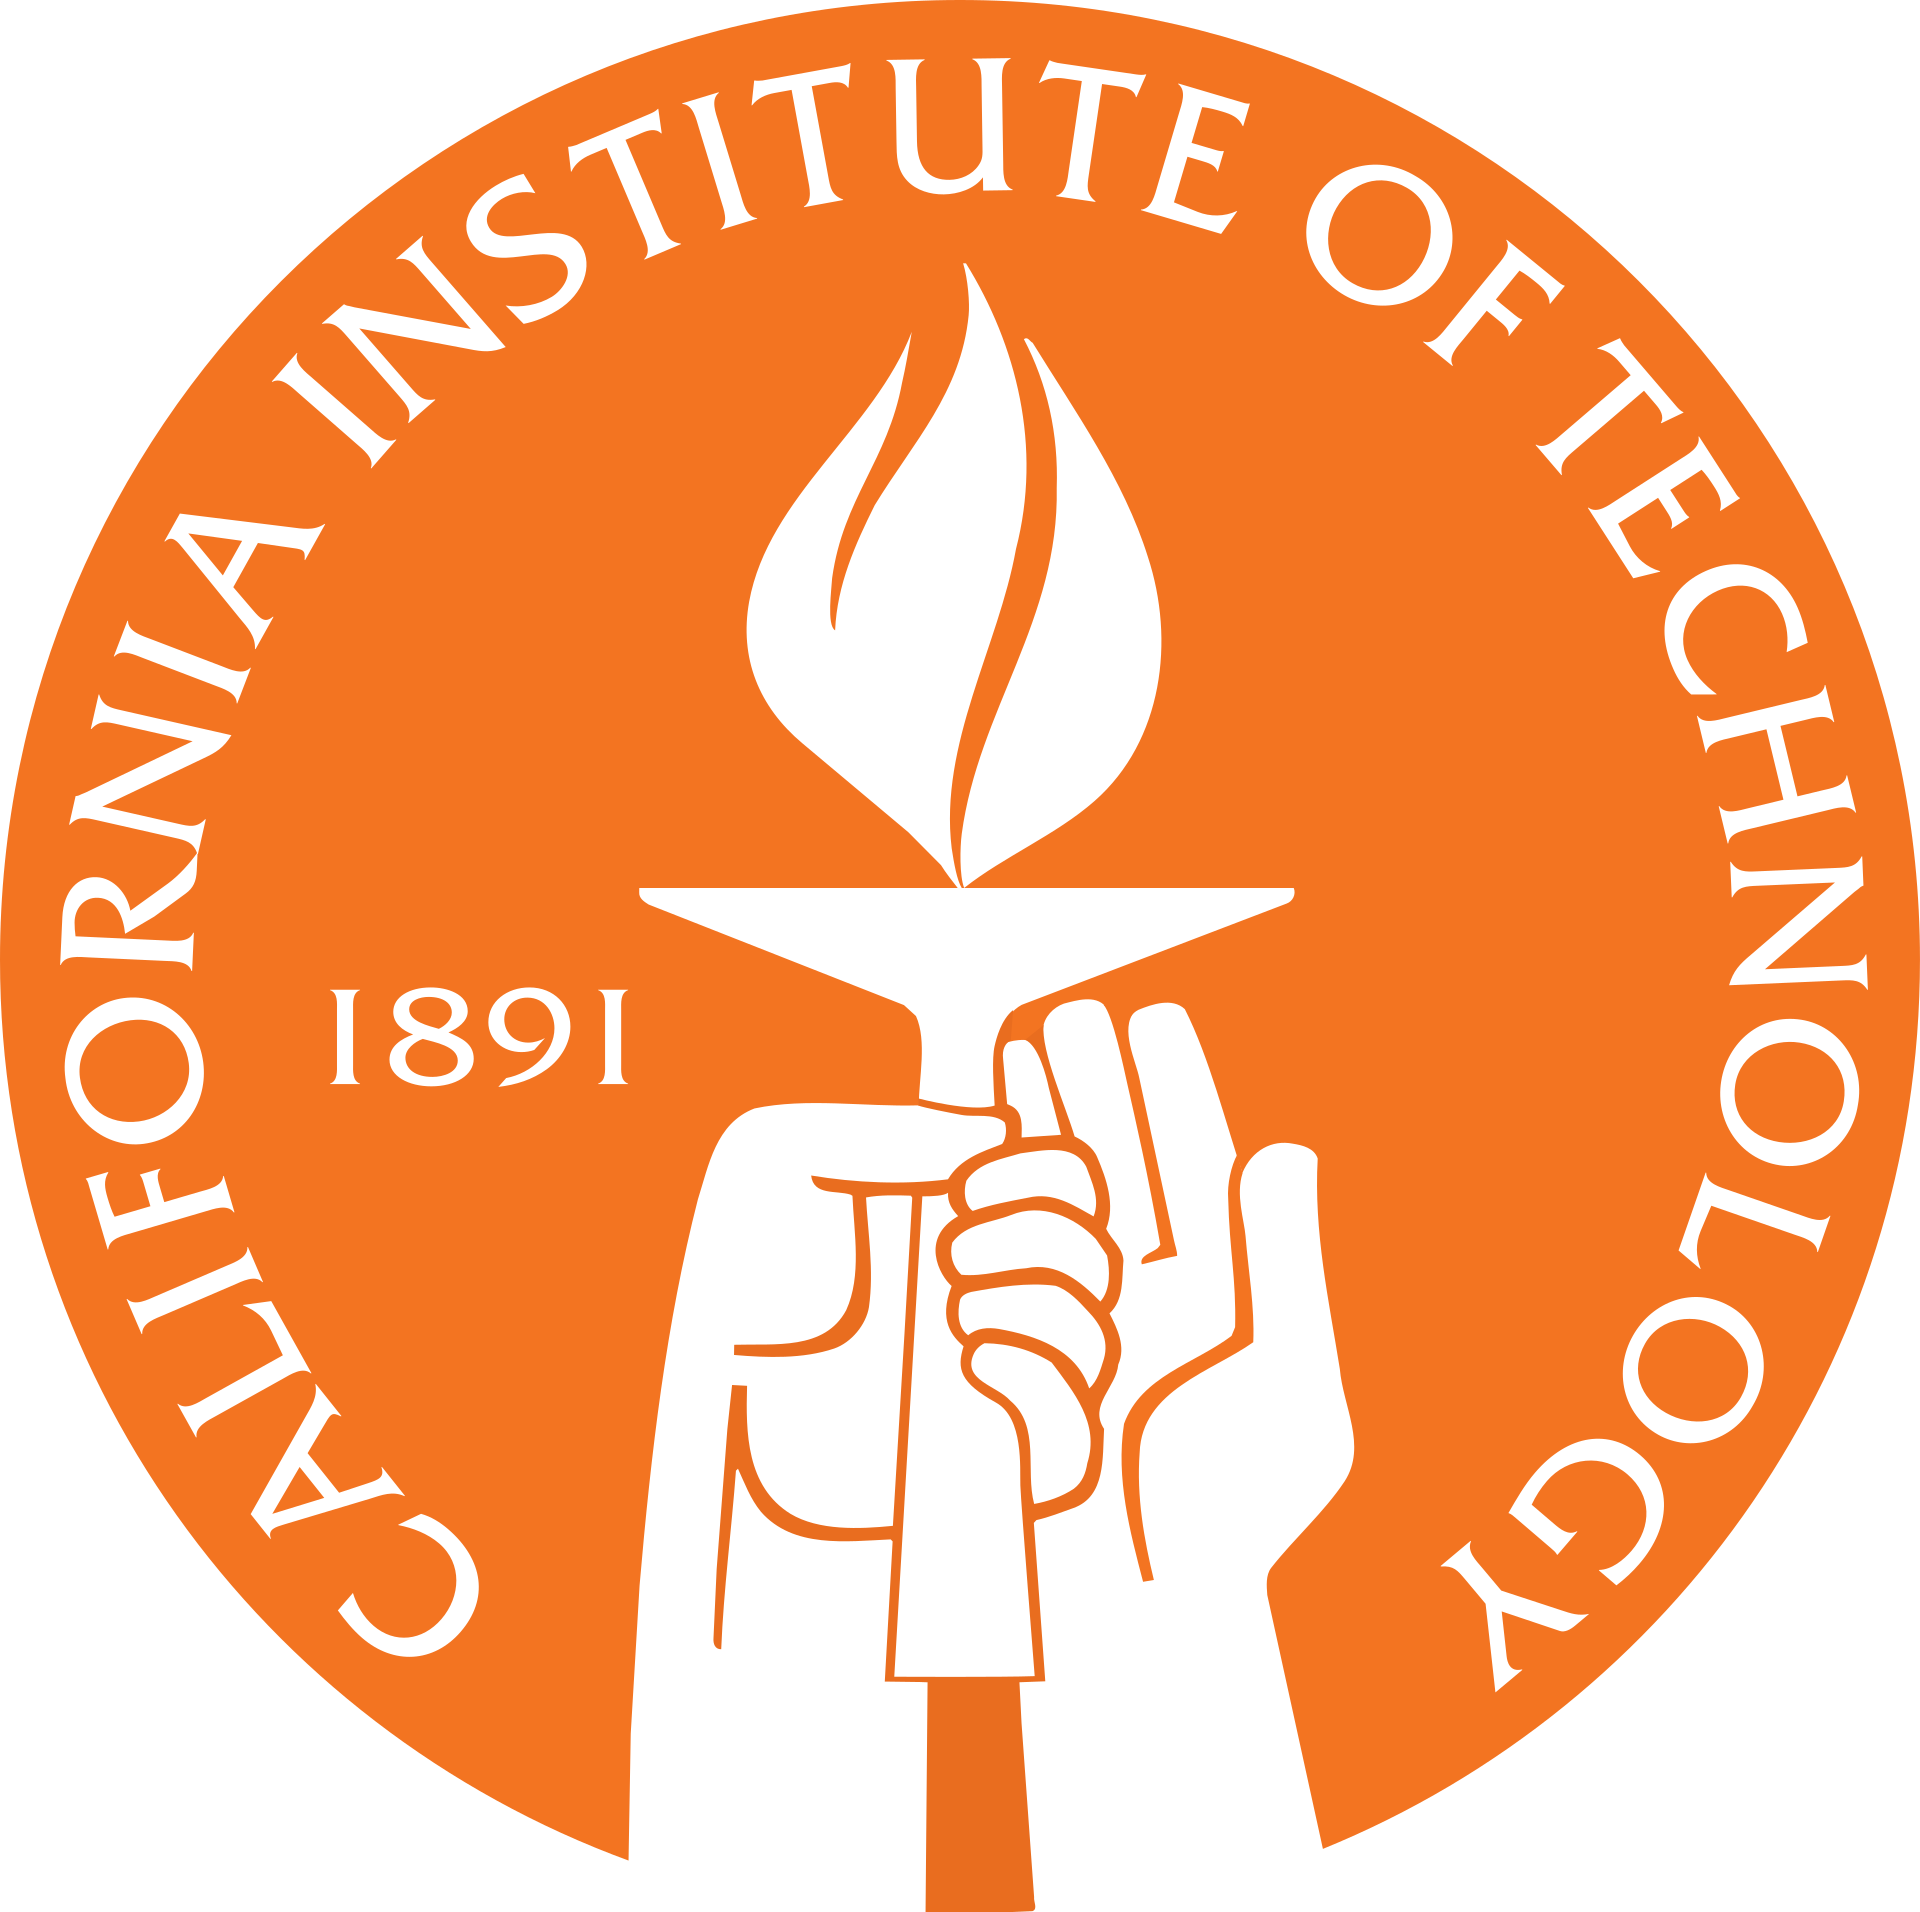 Caltech - California Institute of Technology - Калтех - Калифорнийский технологический институт